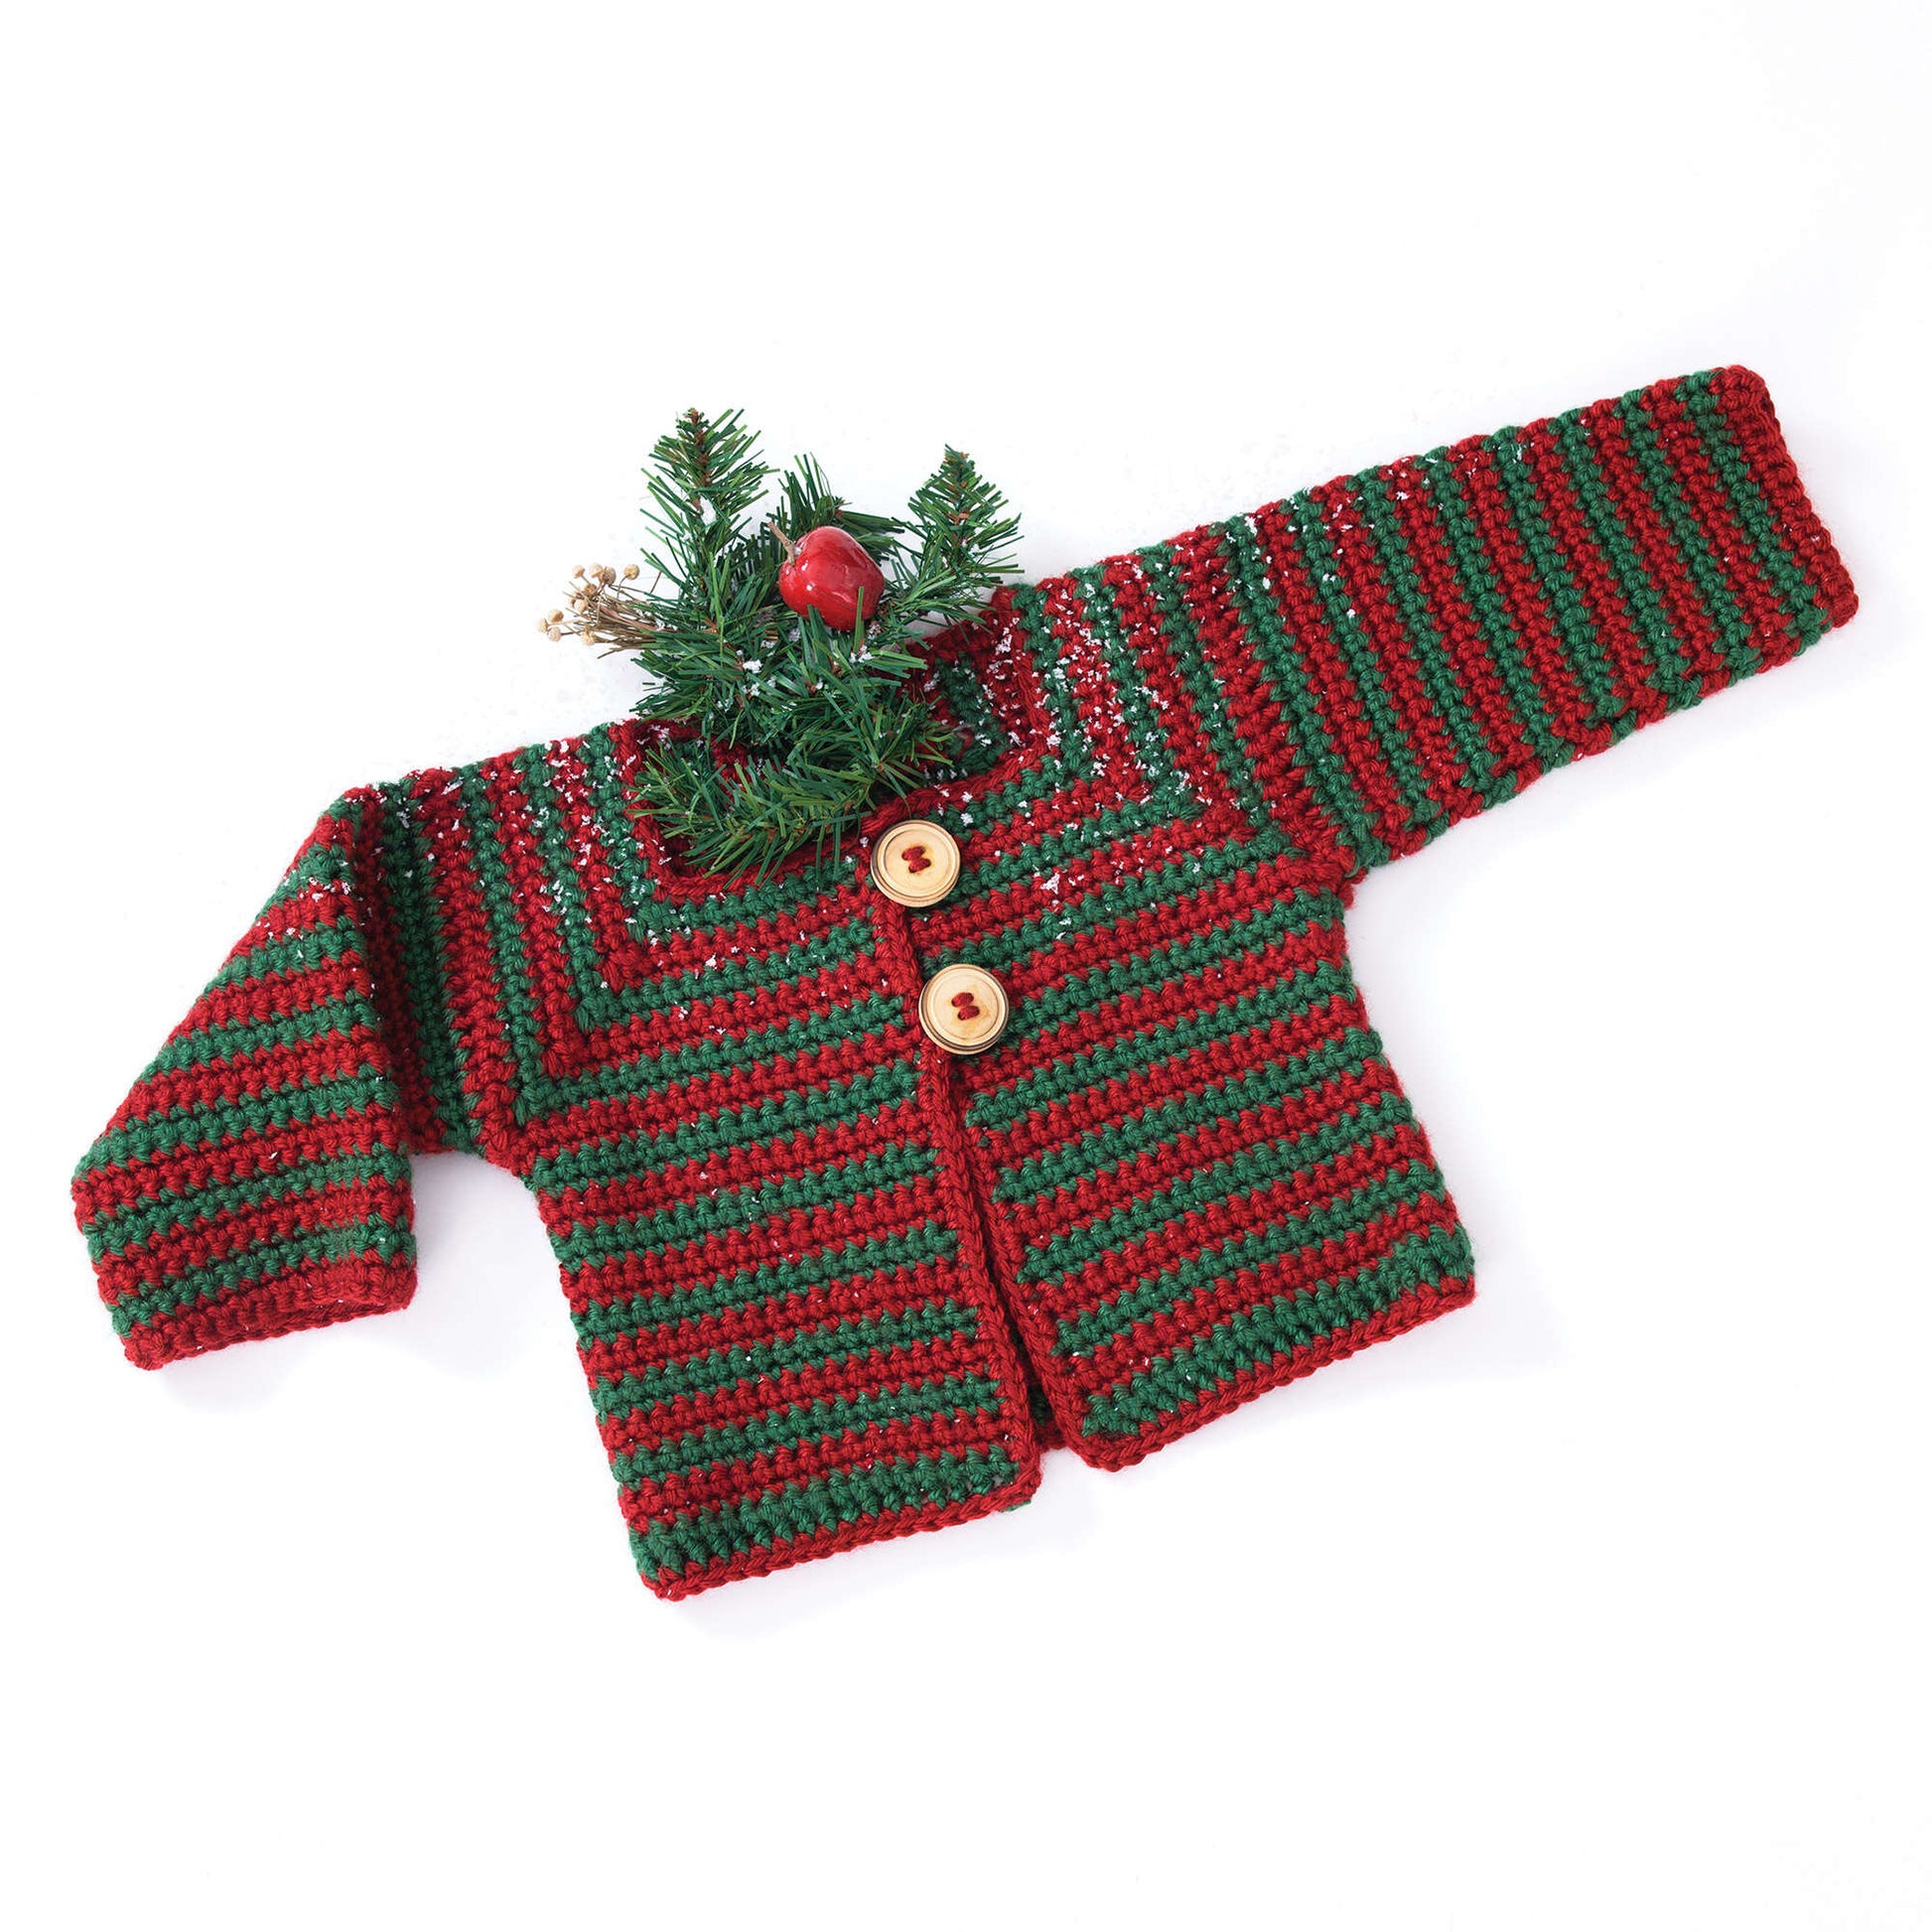 Free Caron Mitered Striped Baby Sweater Crochet Pattern